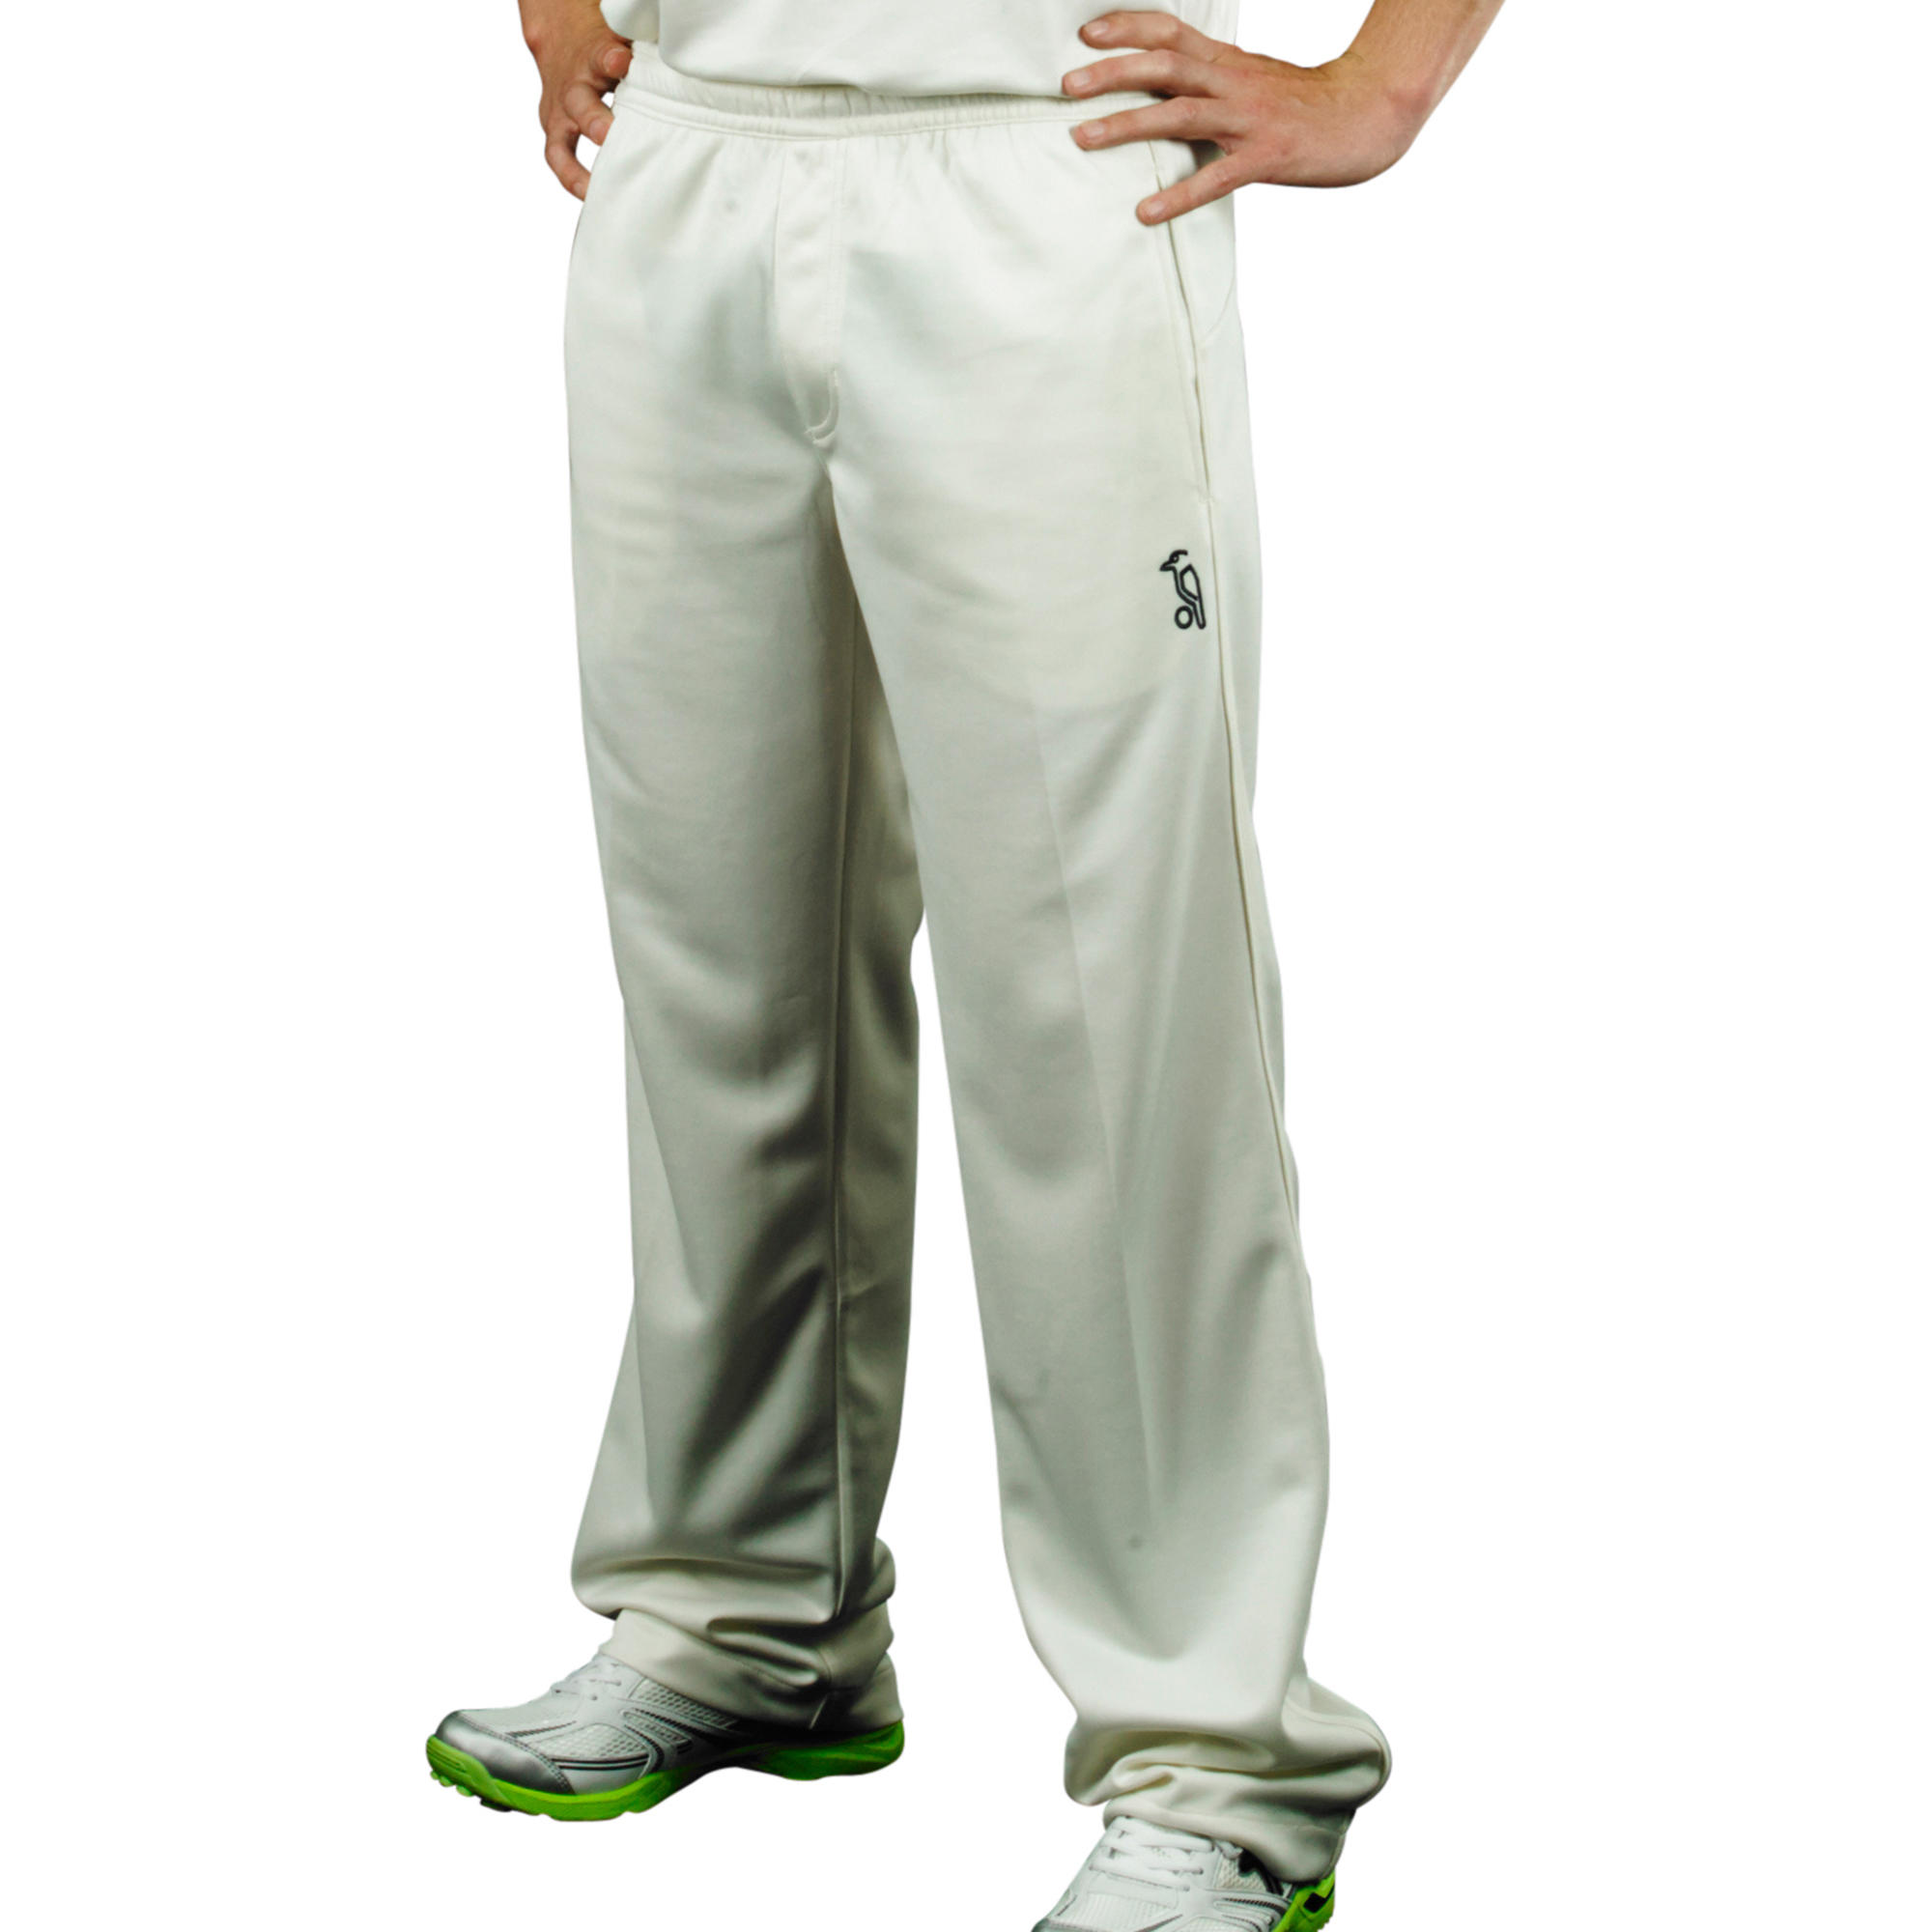 cricket white dress decathlon